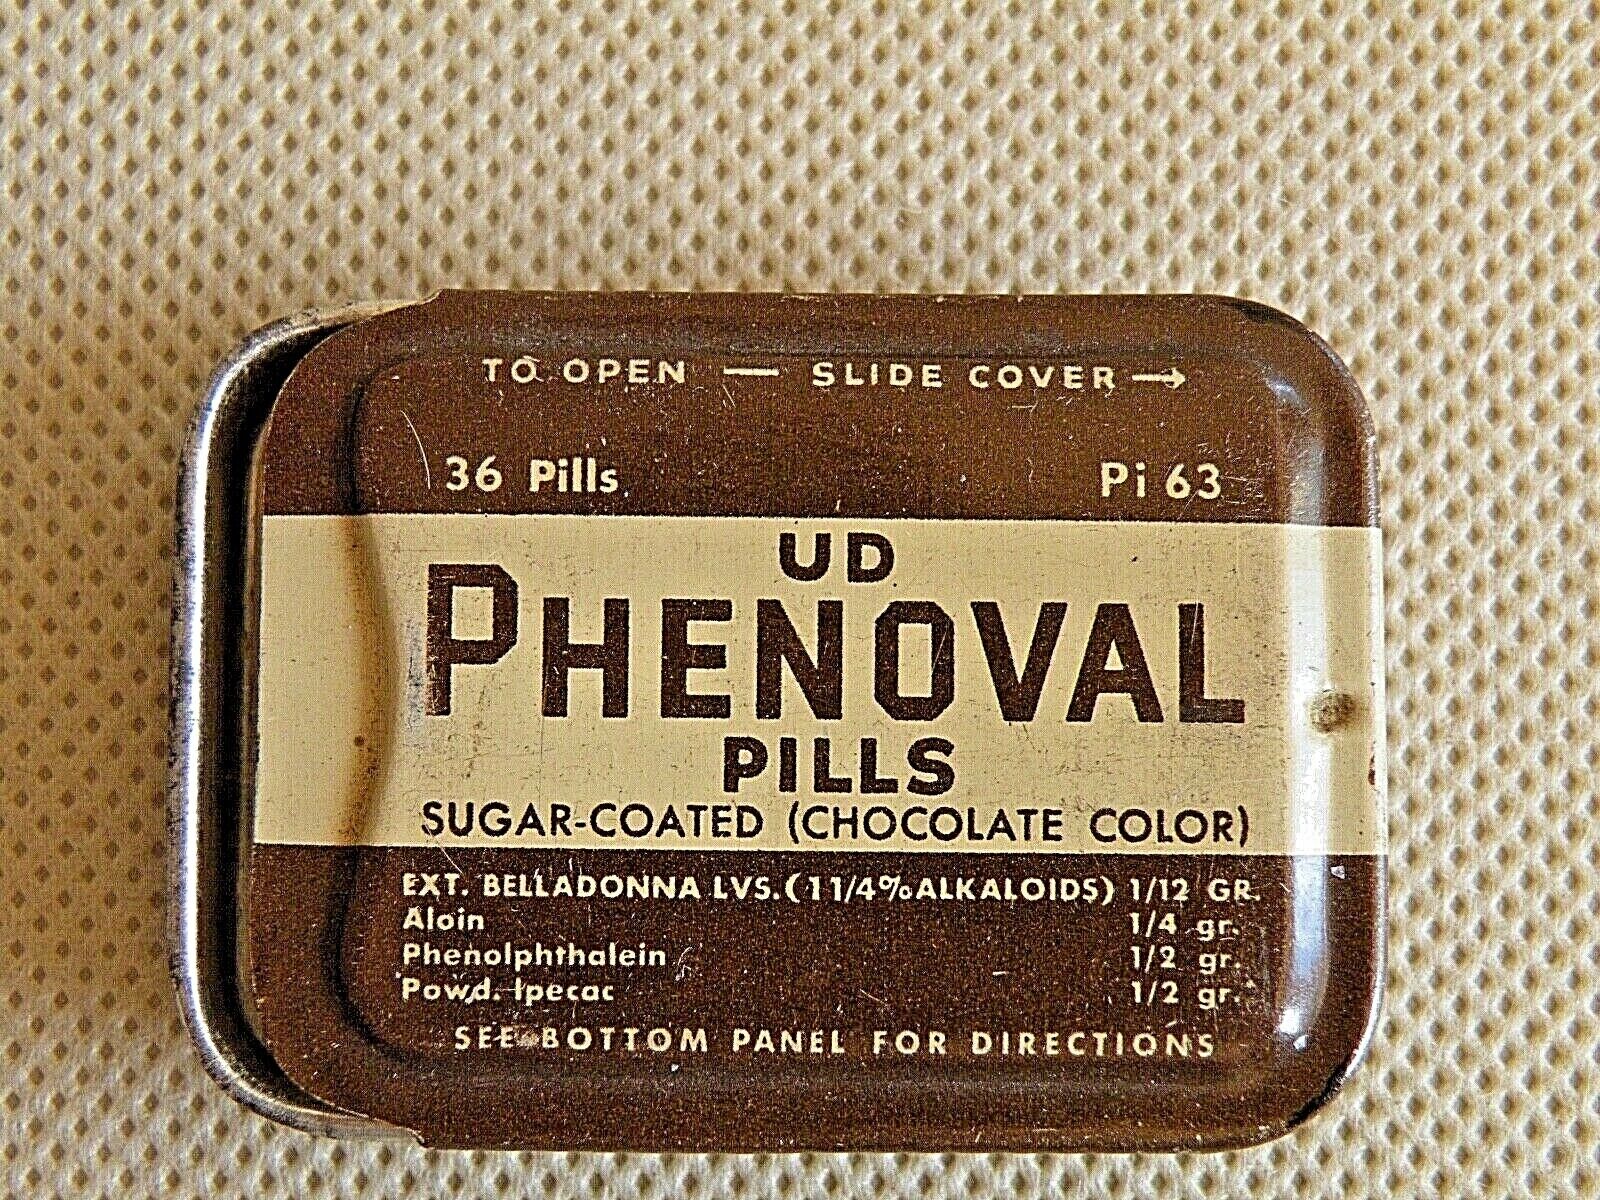  Phenoval Pills  Tin Size 12  Aspirin Tablet Tin  United Drug (Rexall)